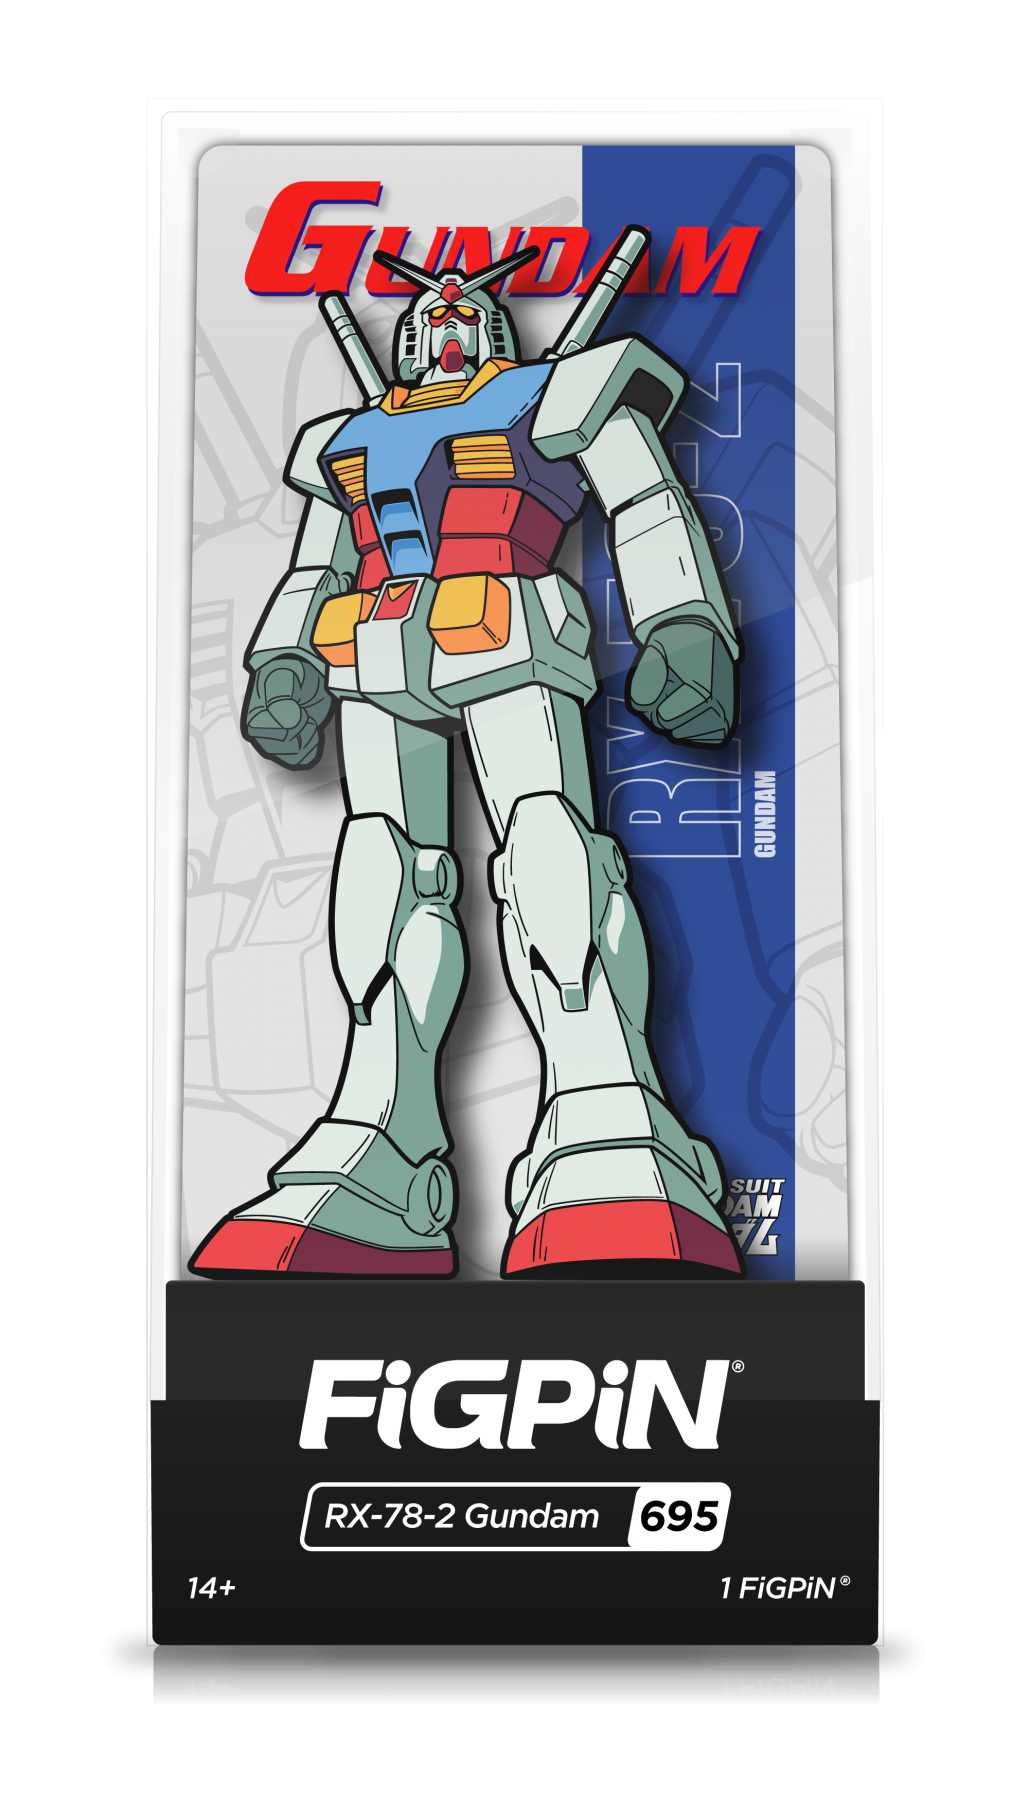 FiGPiN RX-78-2 Gundam (695) Collectable Enamel Pin MKWCPEGOAD |28276|